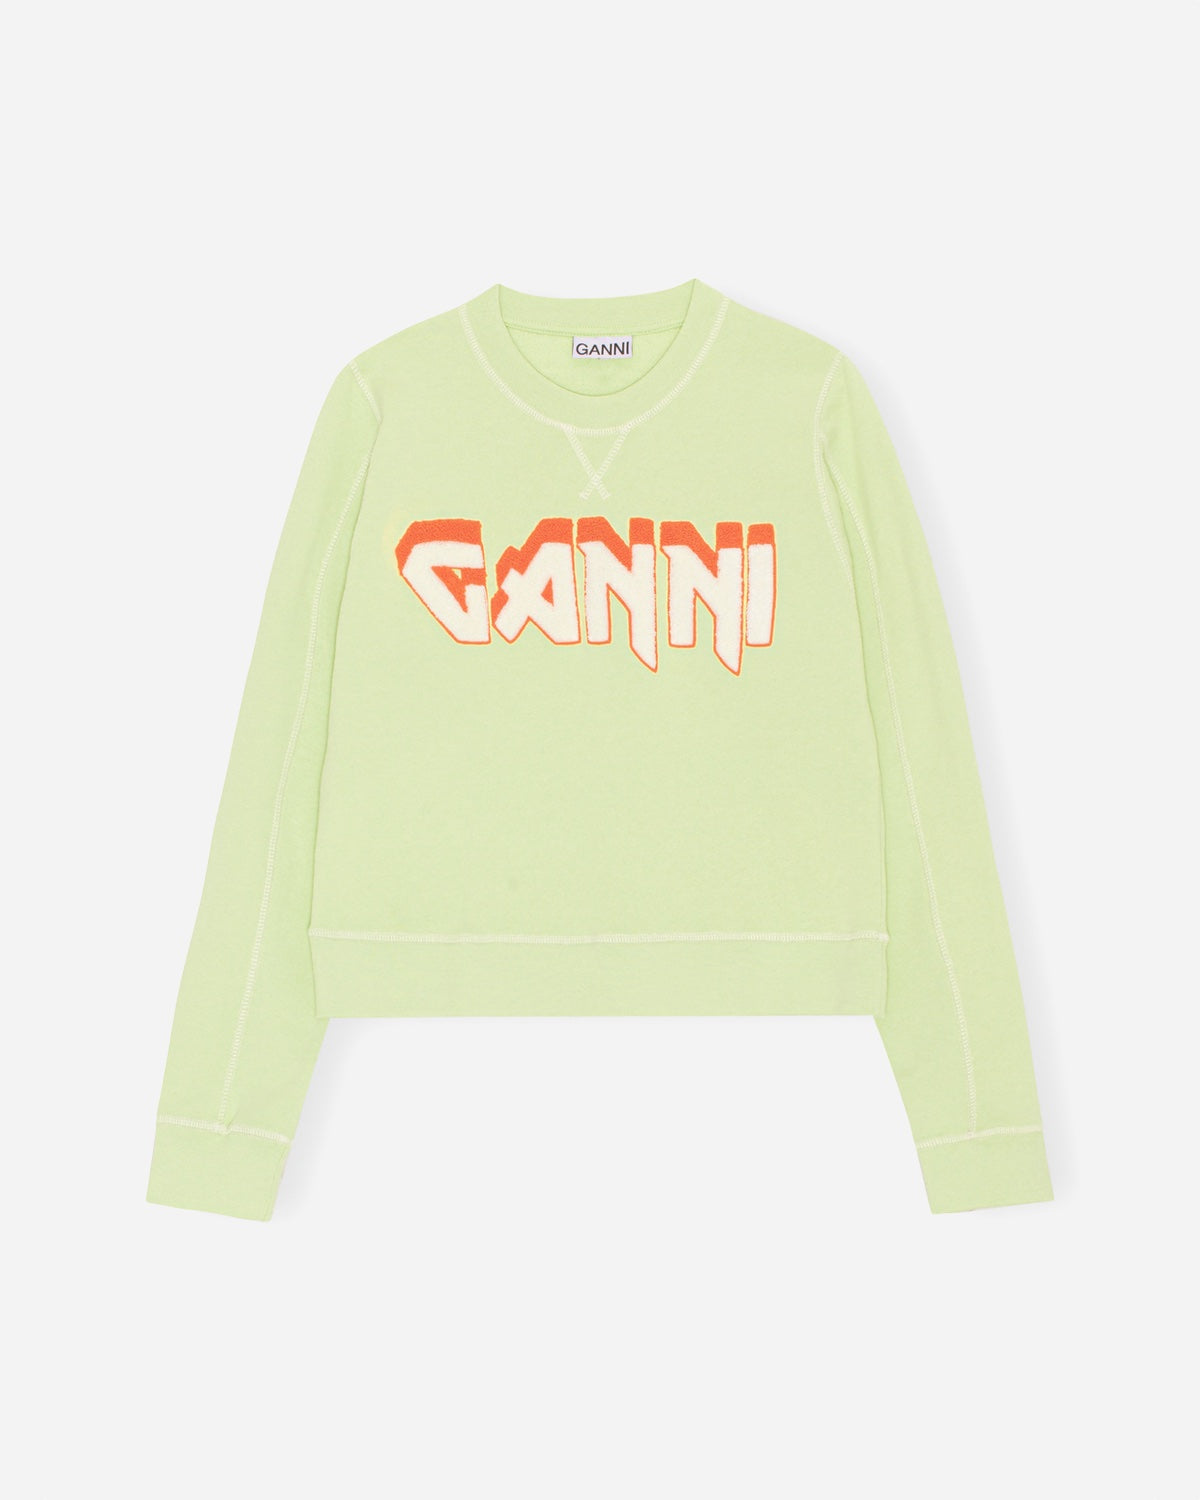 Isoli Ganni Rock Sweatshirt - Lily Green - Ganni - Munkstore.dk